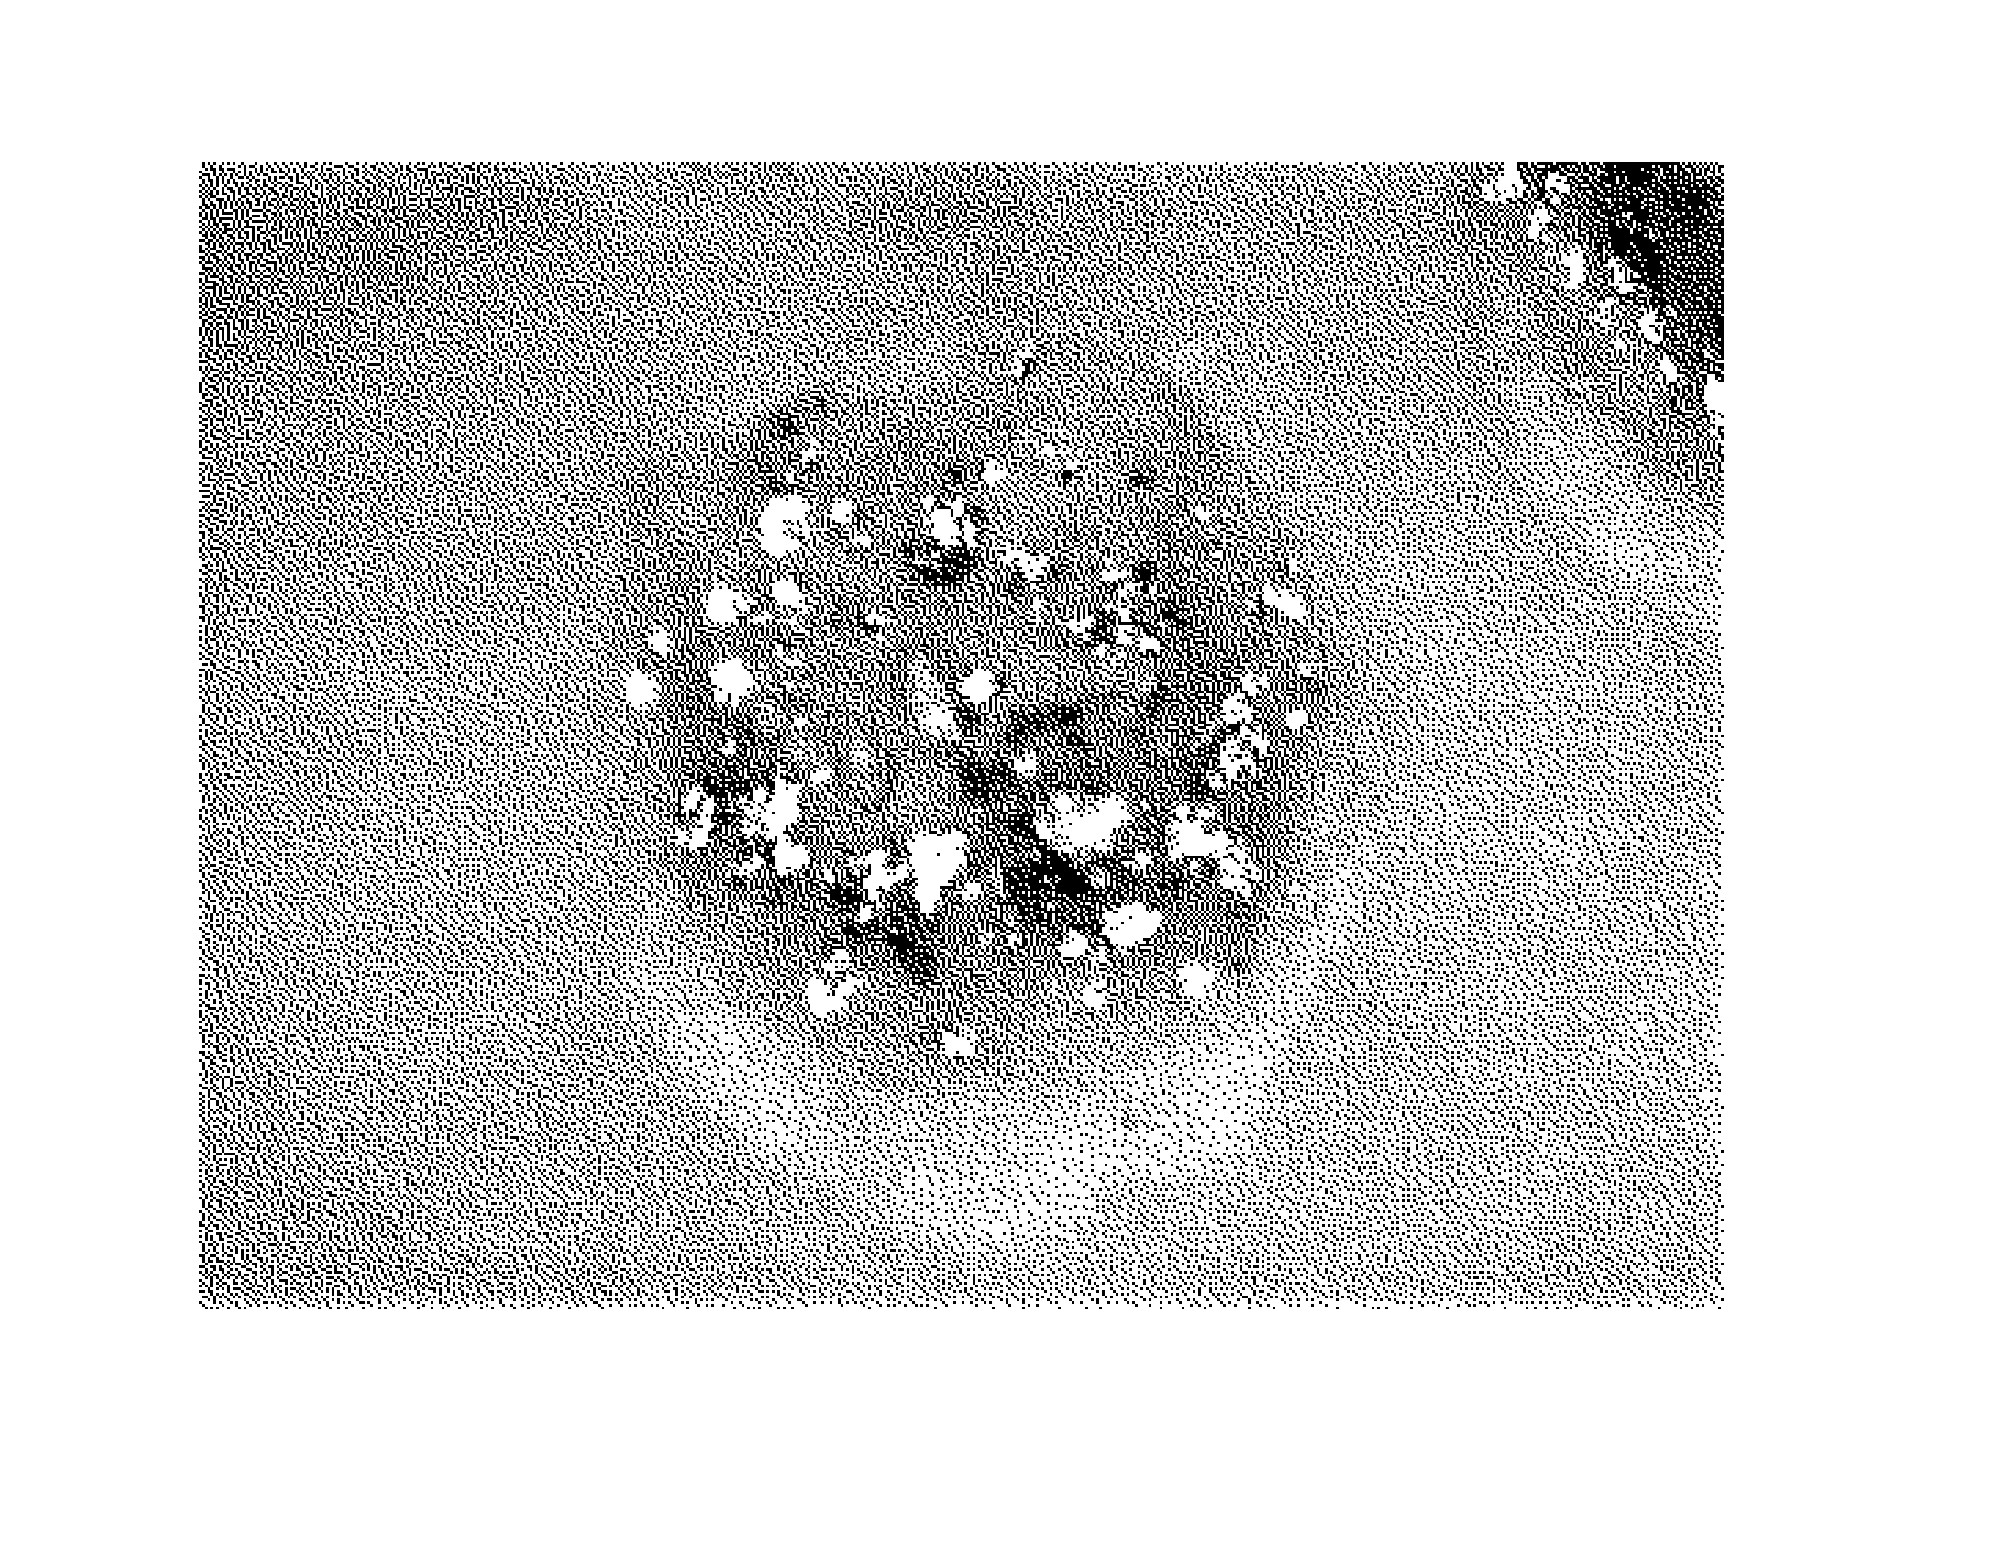 Toner containing metallic flakes and method of forming metallic image